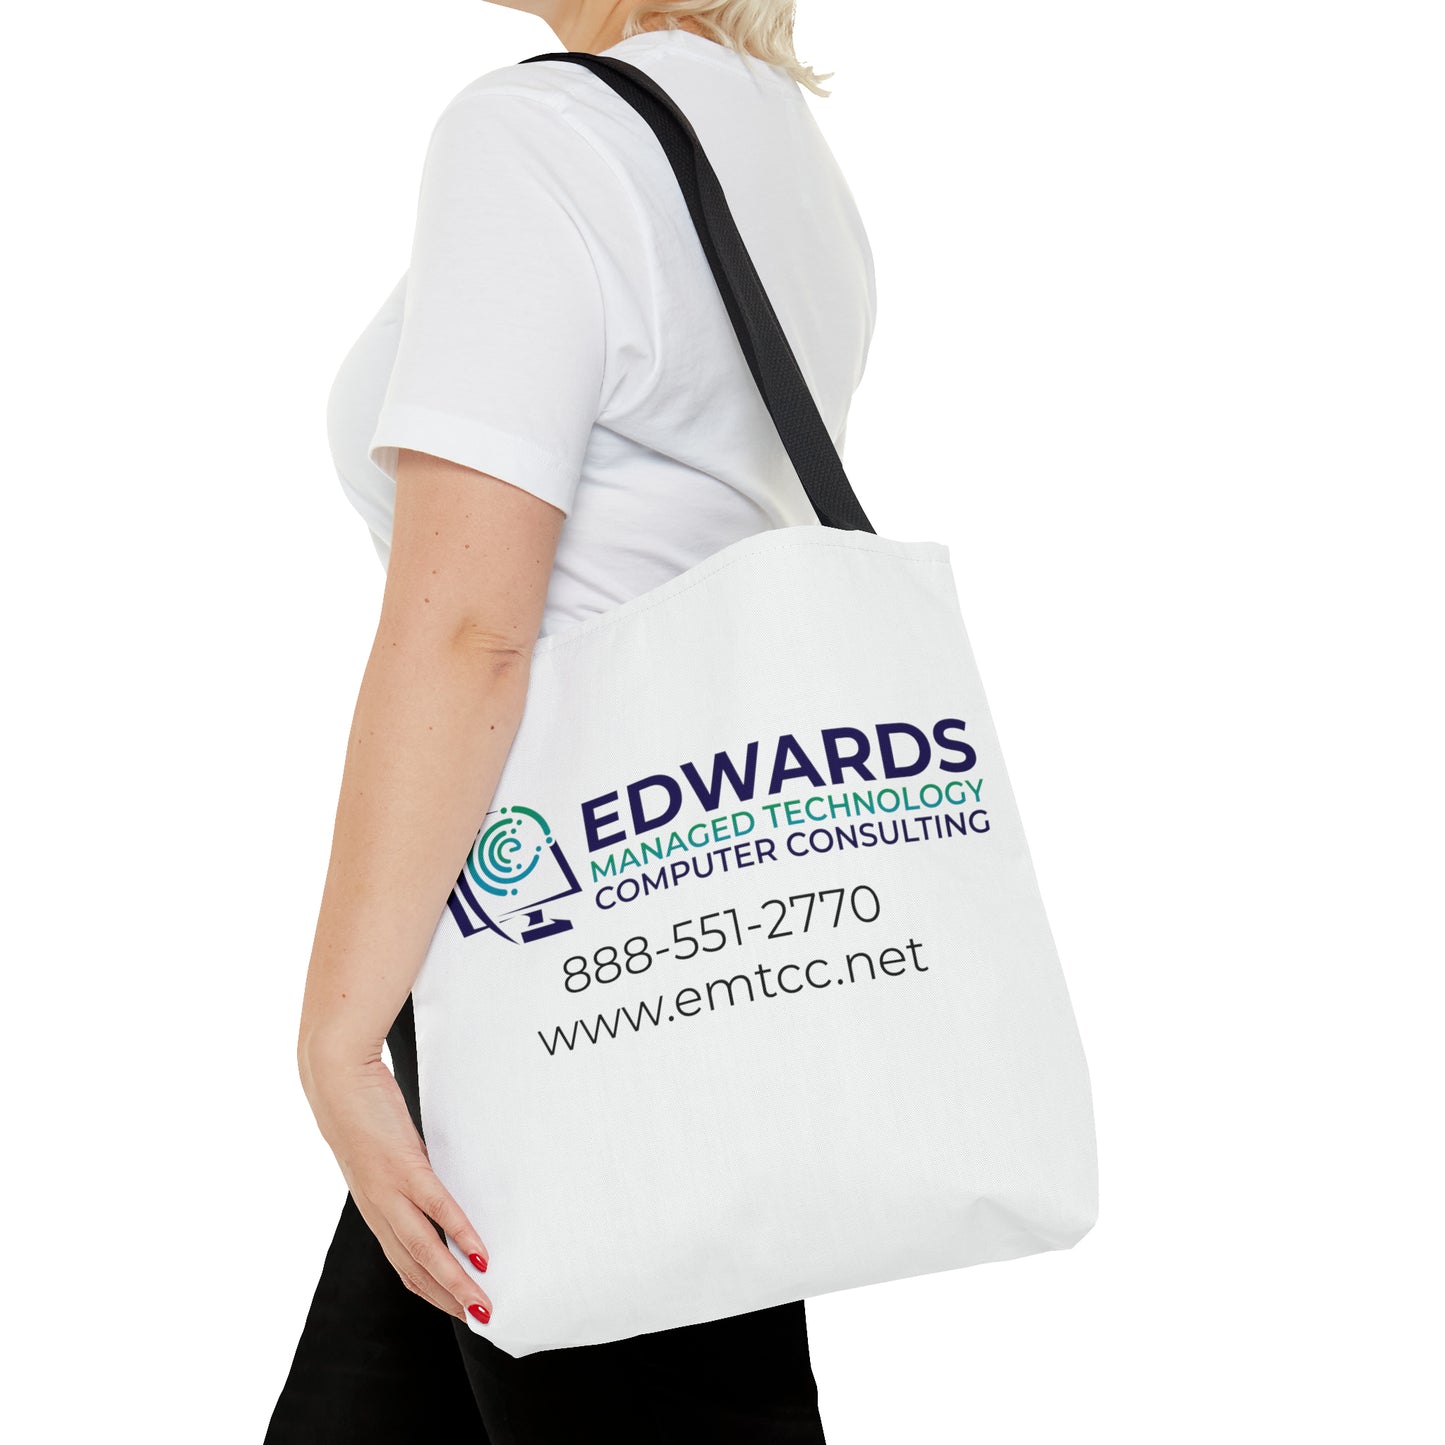 Edwards Managed Technology Tote Bag (AOP)